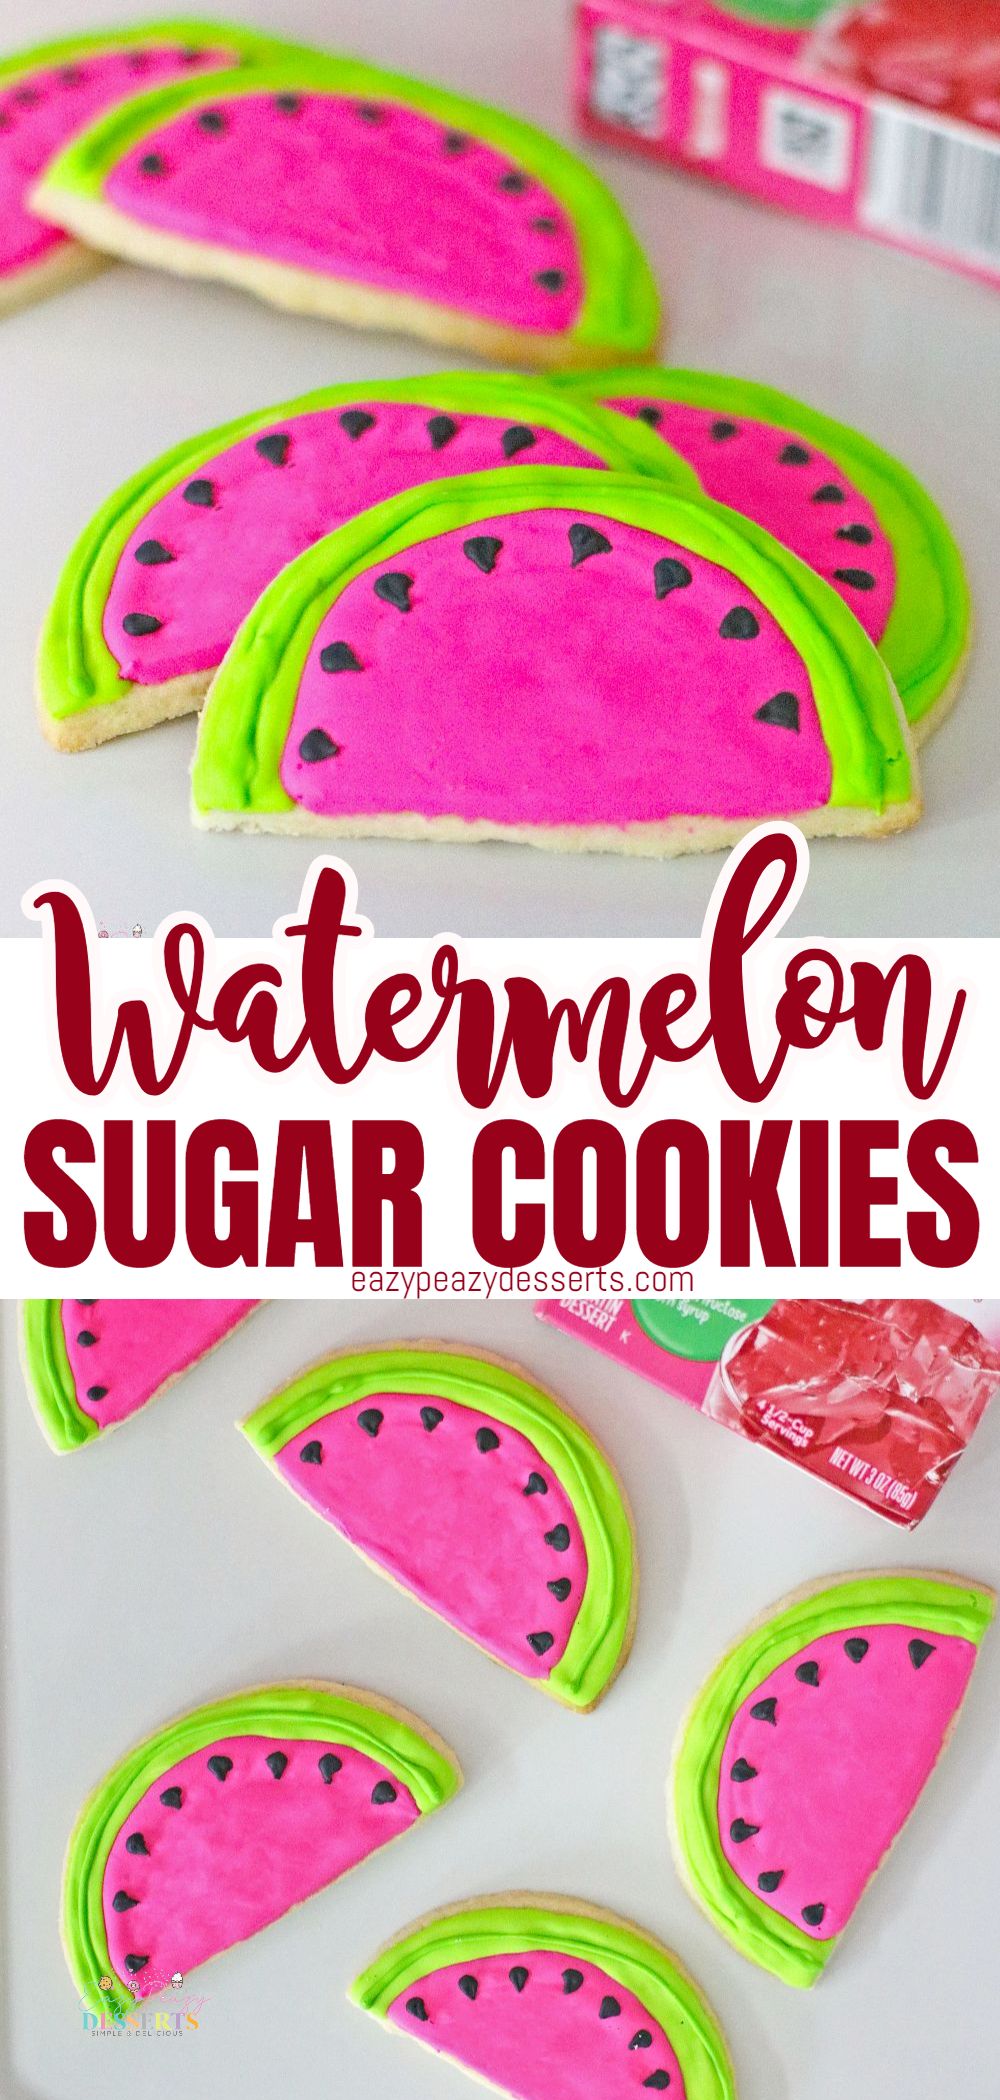 Watermelon cookies recipe